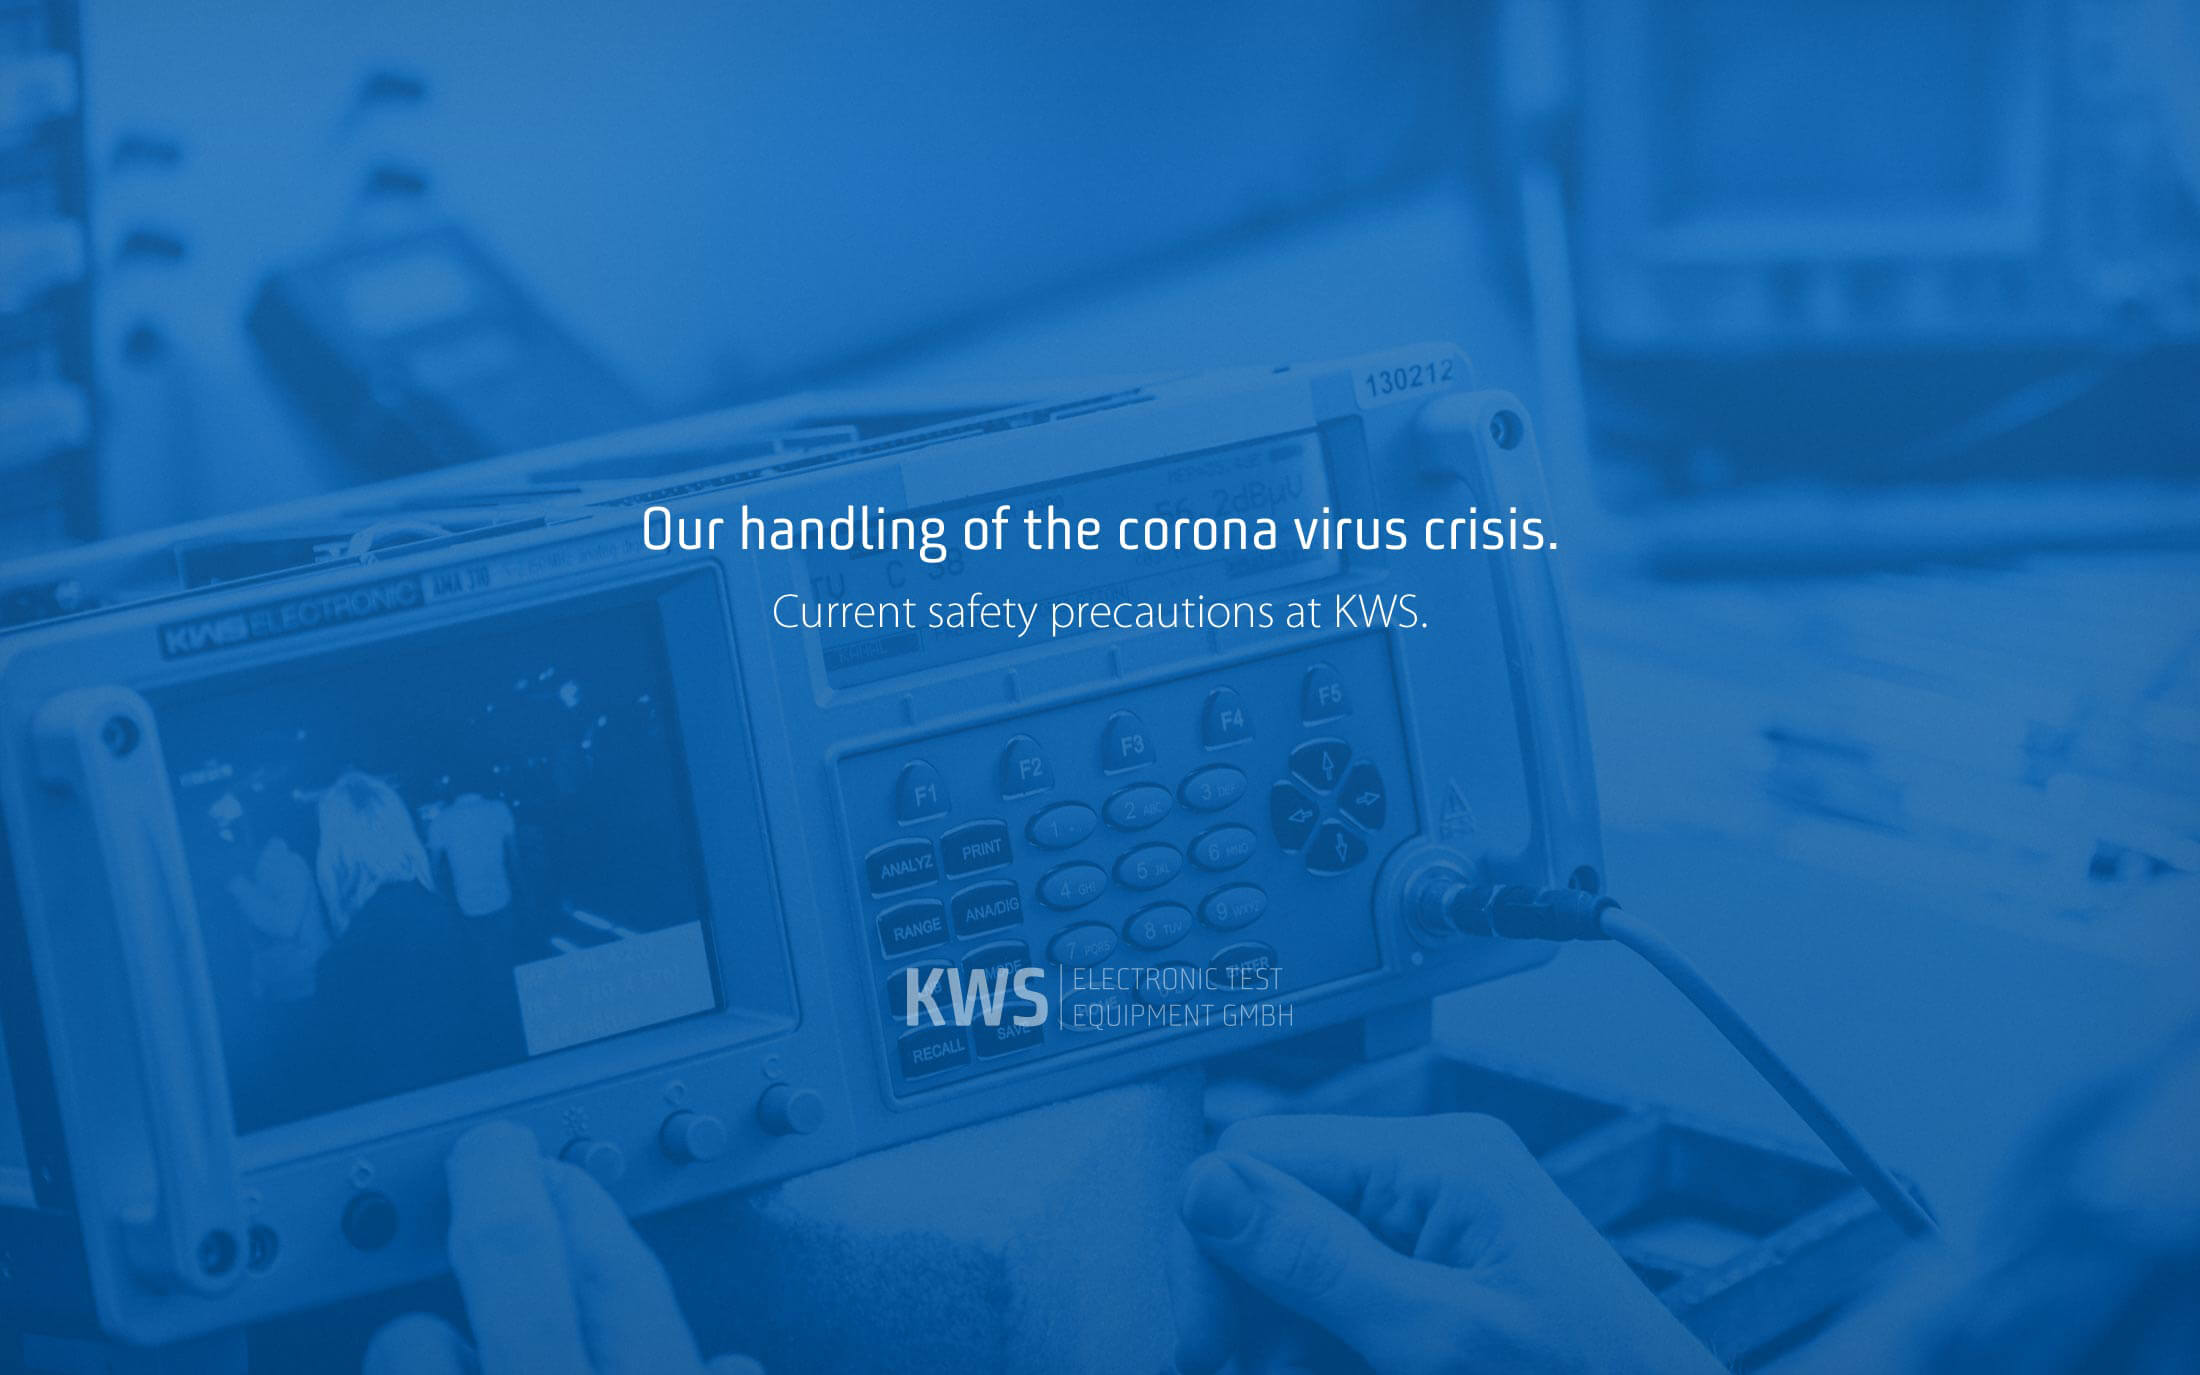 KWS Electronic News 2020: Our handling of the corona crisis